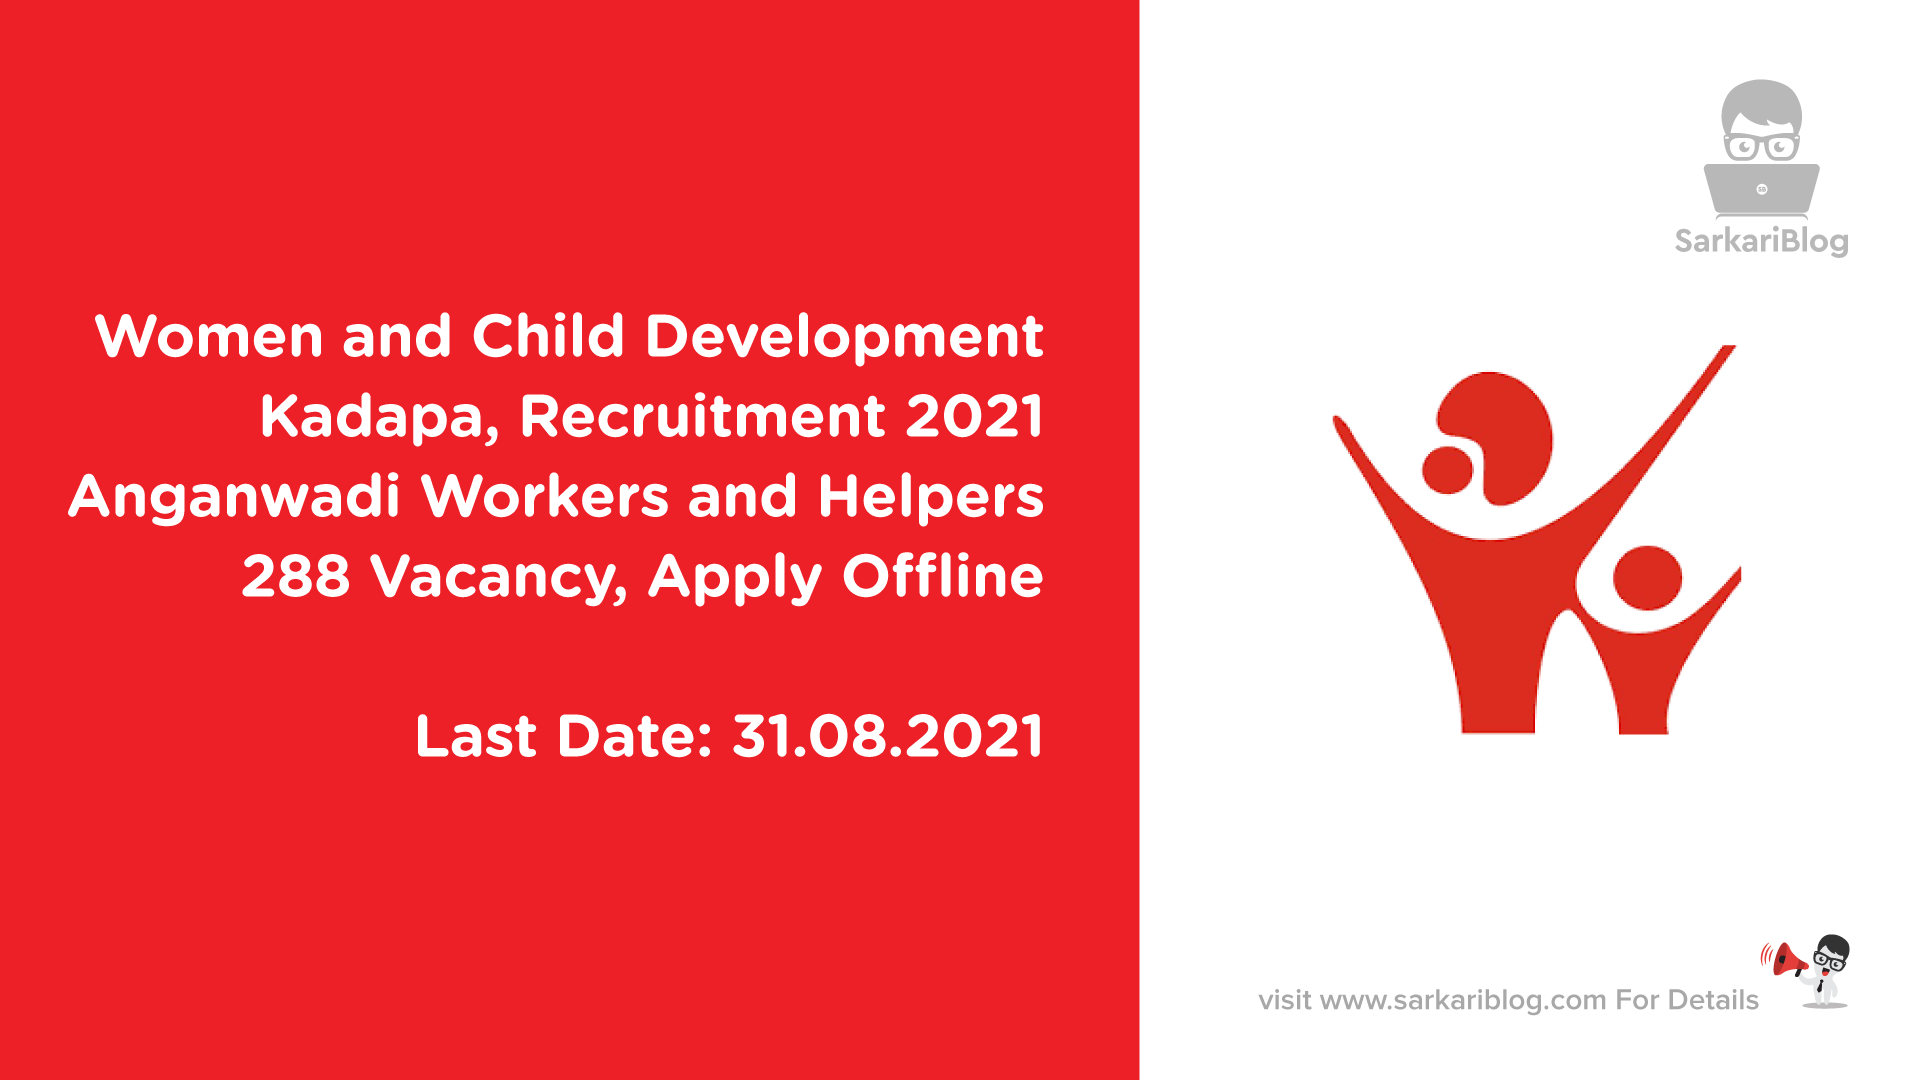 Women and Child Development Kadapa Recruitment 2021